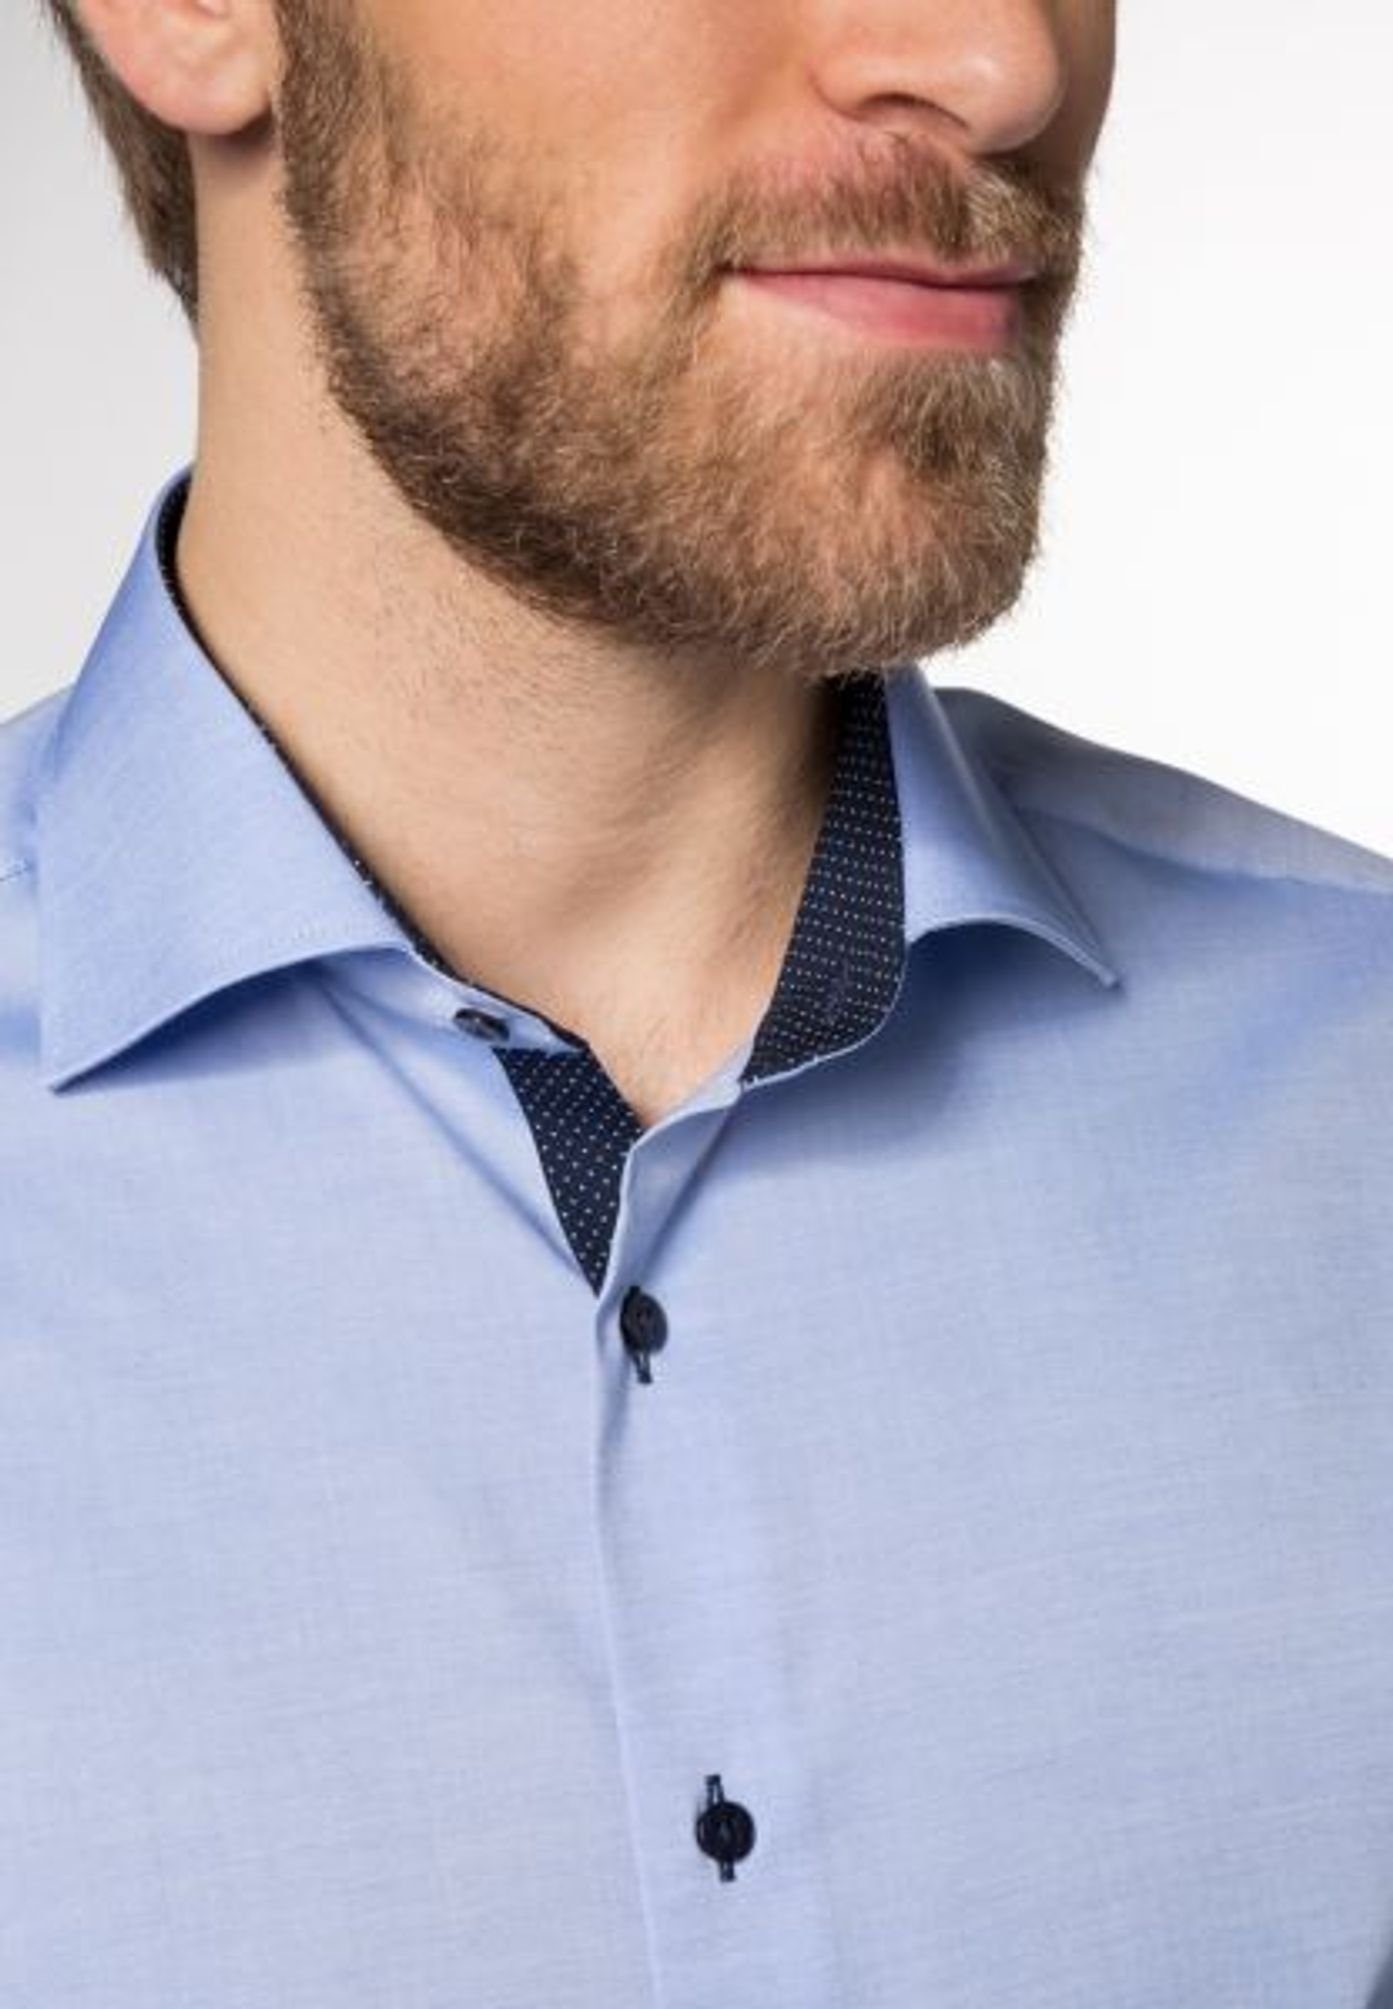 Eterna Langarmhemd Modern Fit (12) Einfarbig Mittelblau